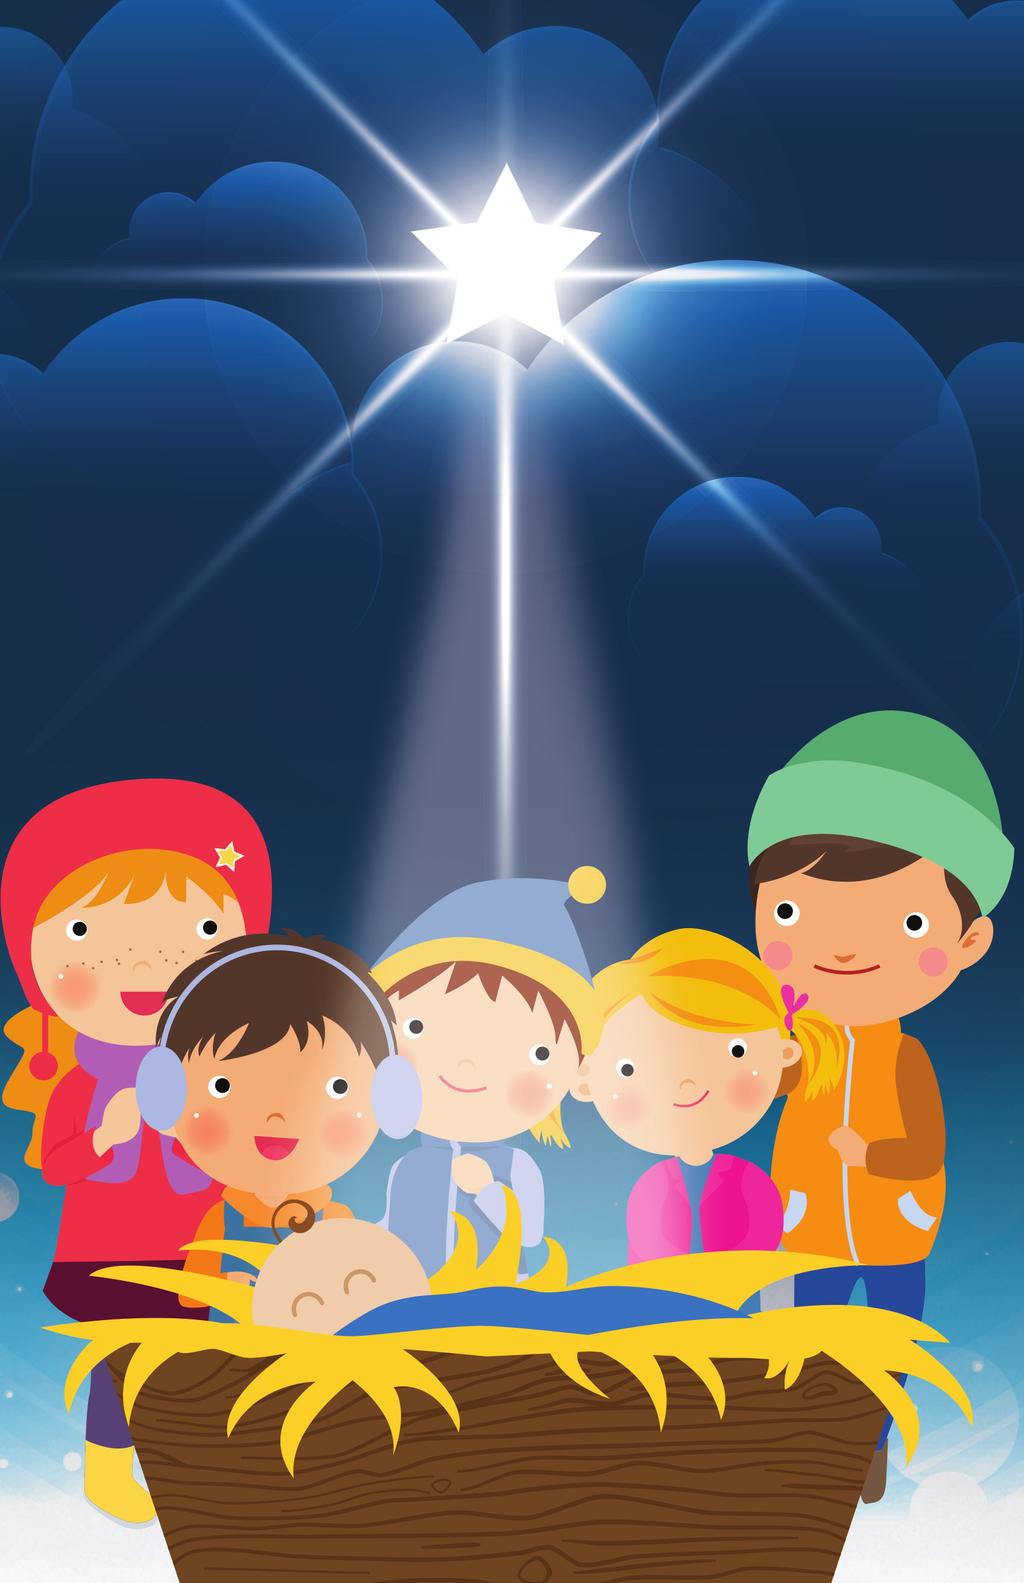 Children s Christmas Service From Heaven e s v n i t o i a